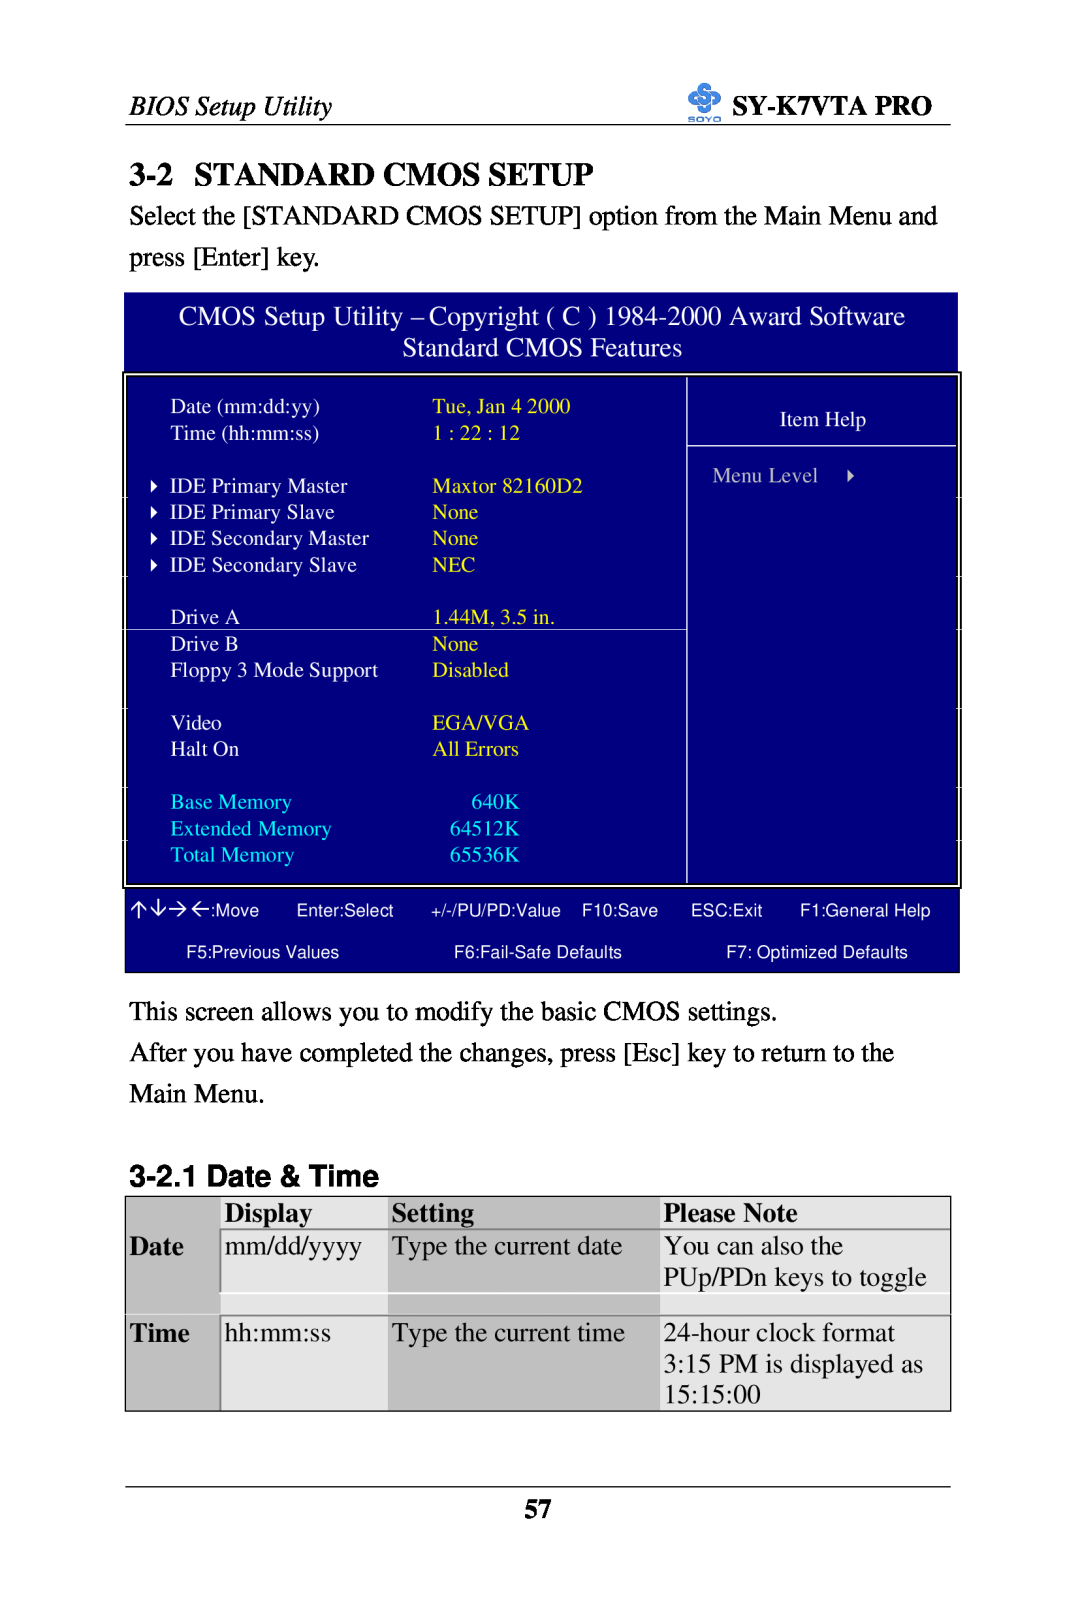 SOYO SY-K7VTA PRO user manual Standard Cmos Setup, Date & Time, Standard CMOS Features, BIOS Setup Utility 